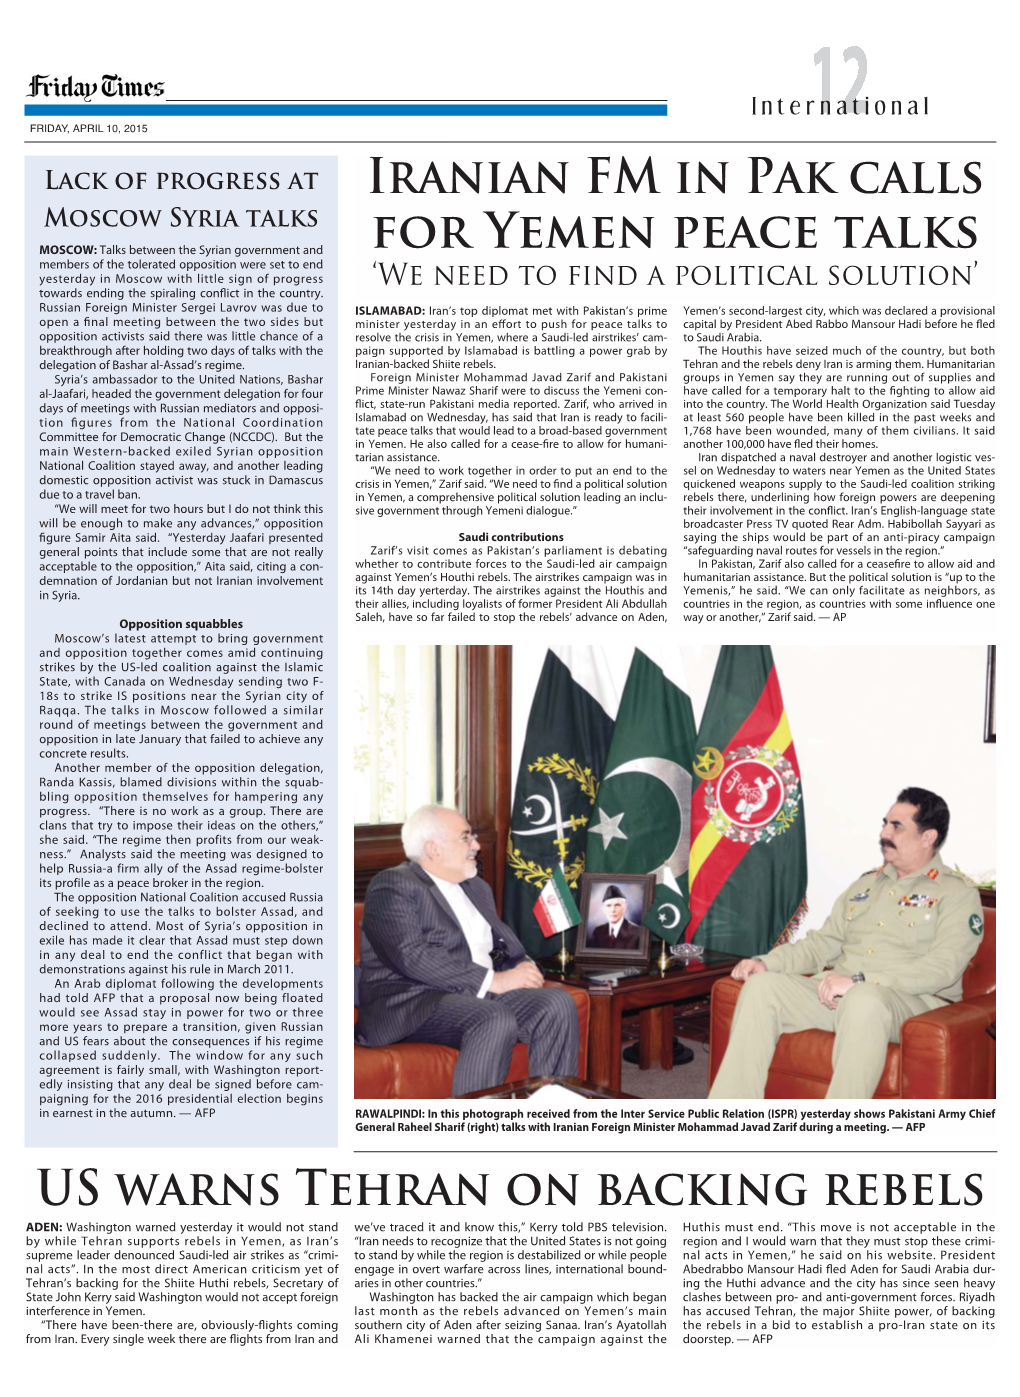 Iranian FM in Pak Calls for YEMEN Peace Talks US Warns